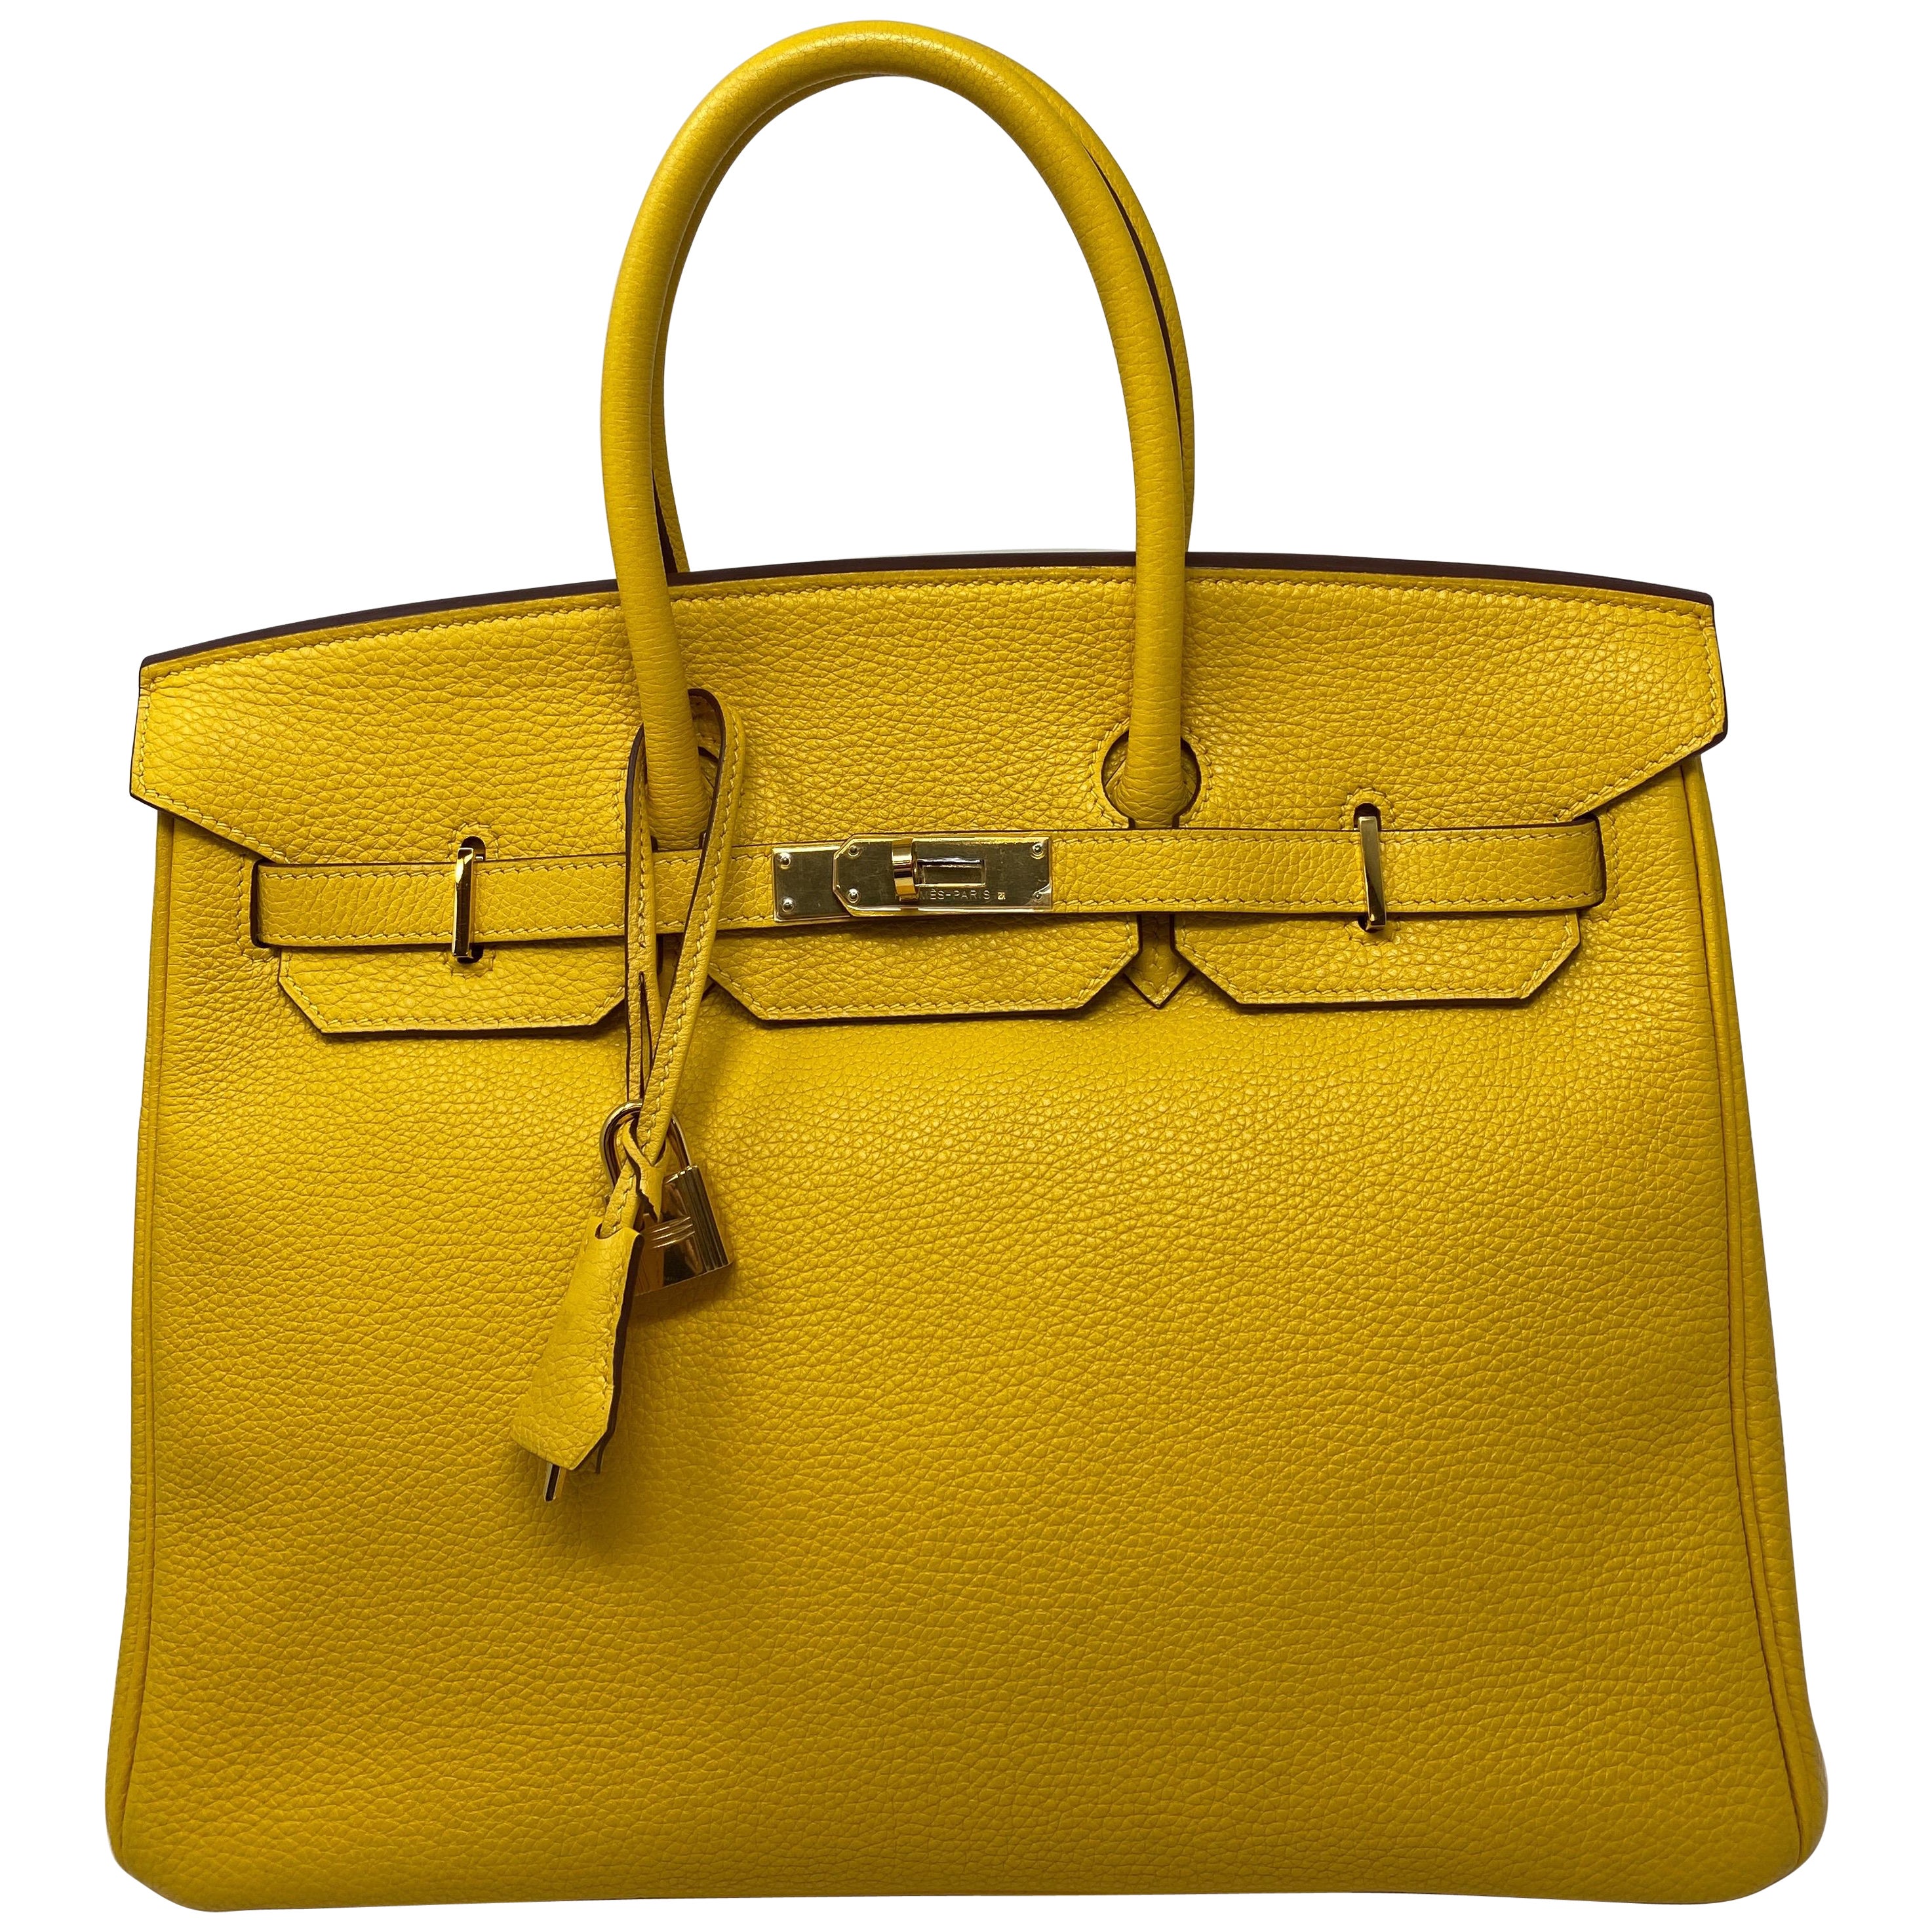 Hermes Soleil Yellow Birkin 35 Bag